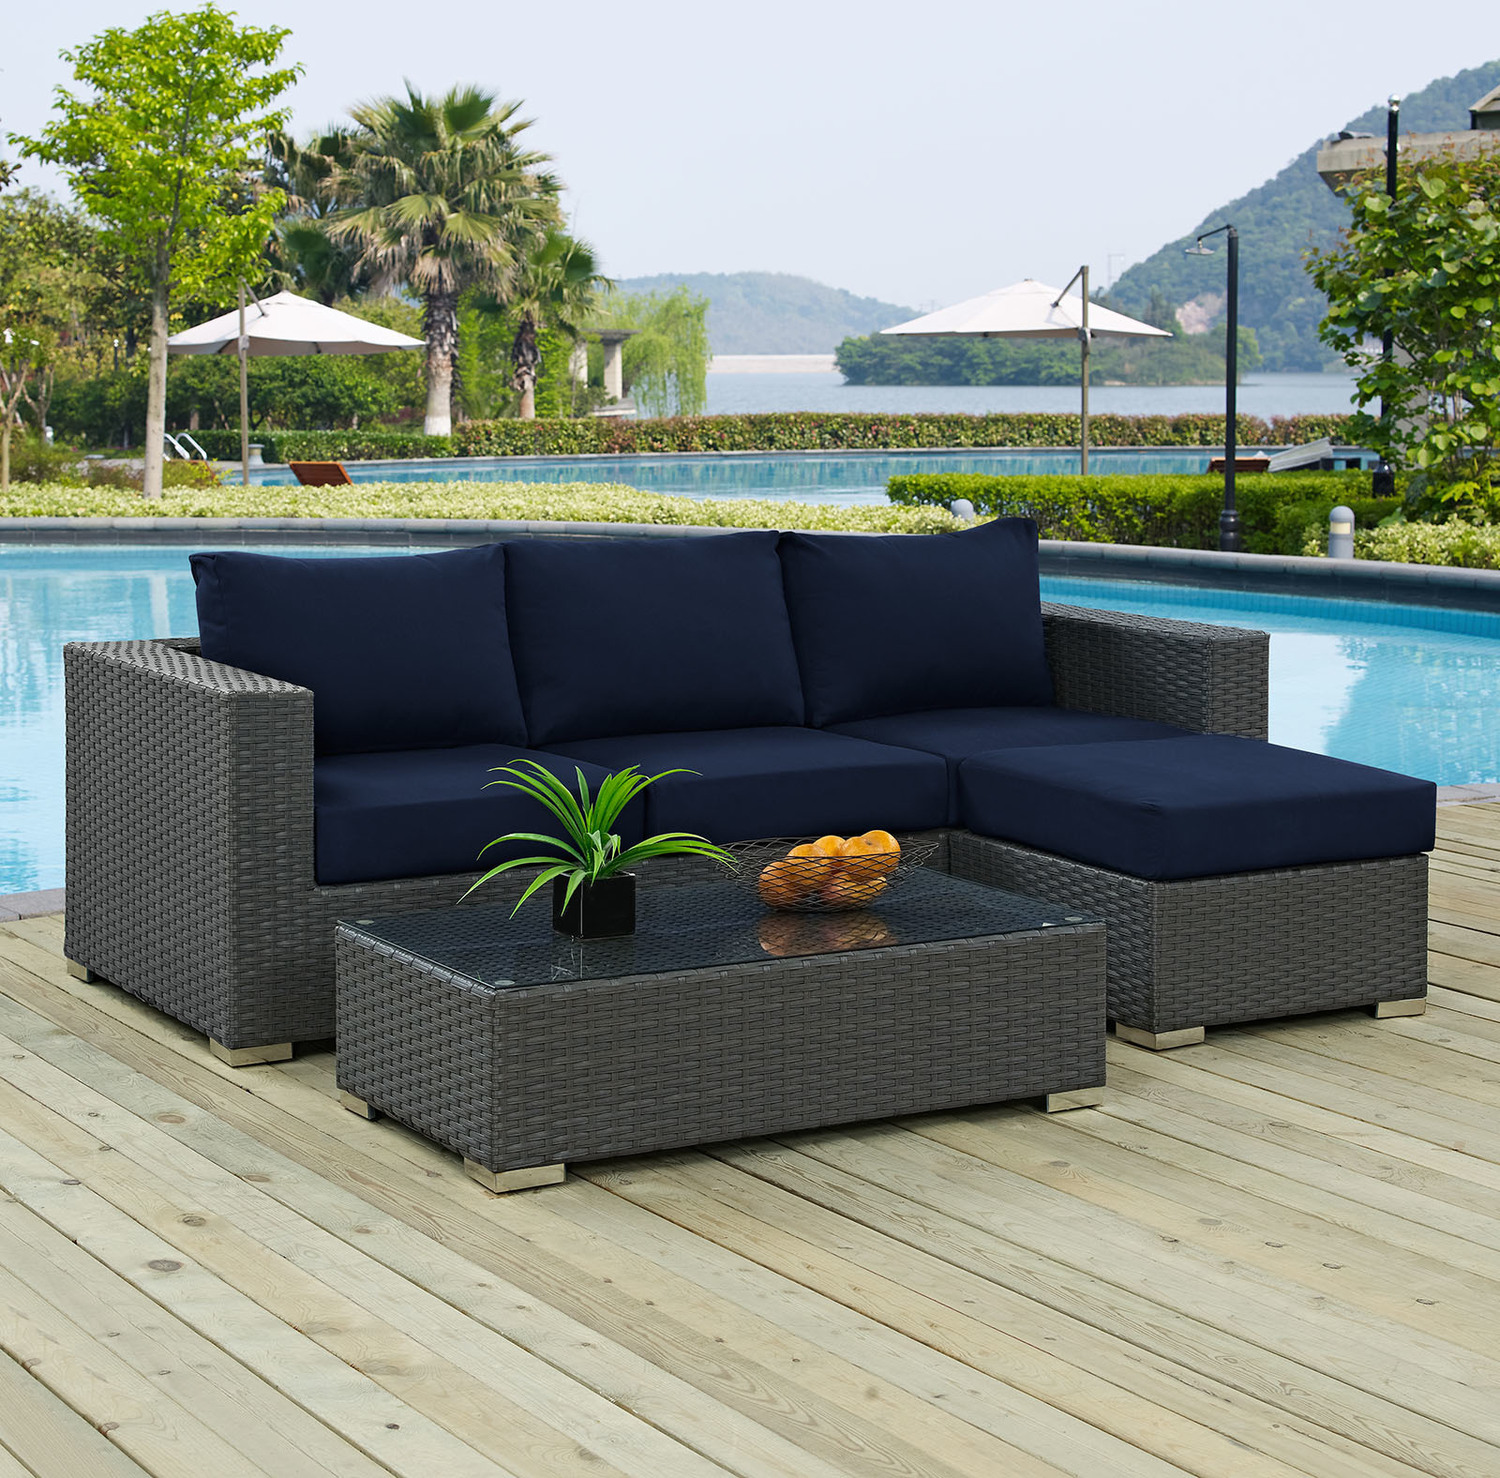 aluminium corner sofa outdoor Modway Furniture Sofa Sectionals Outdoor Sofas and Sectionals Canvas Navy